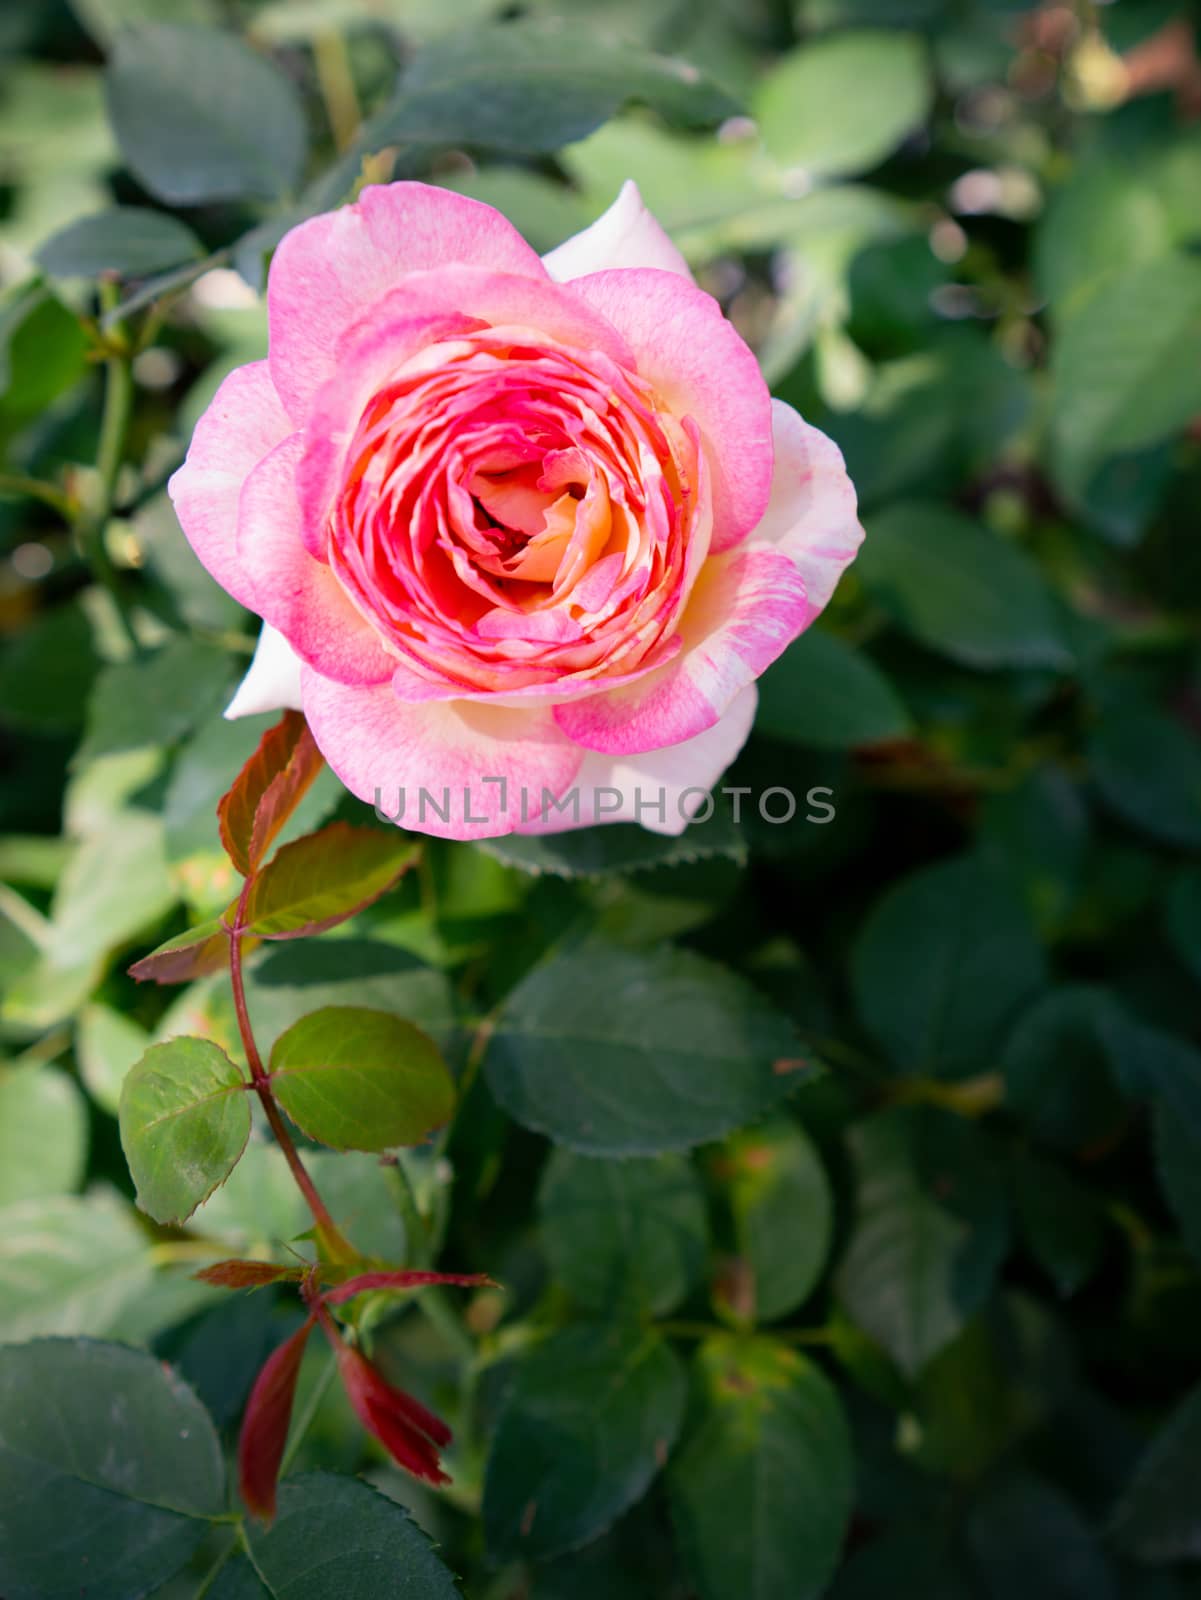 Closeup pink rose flower in the garden.